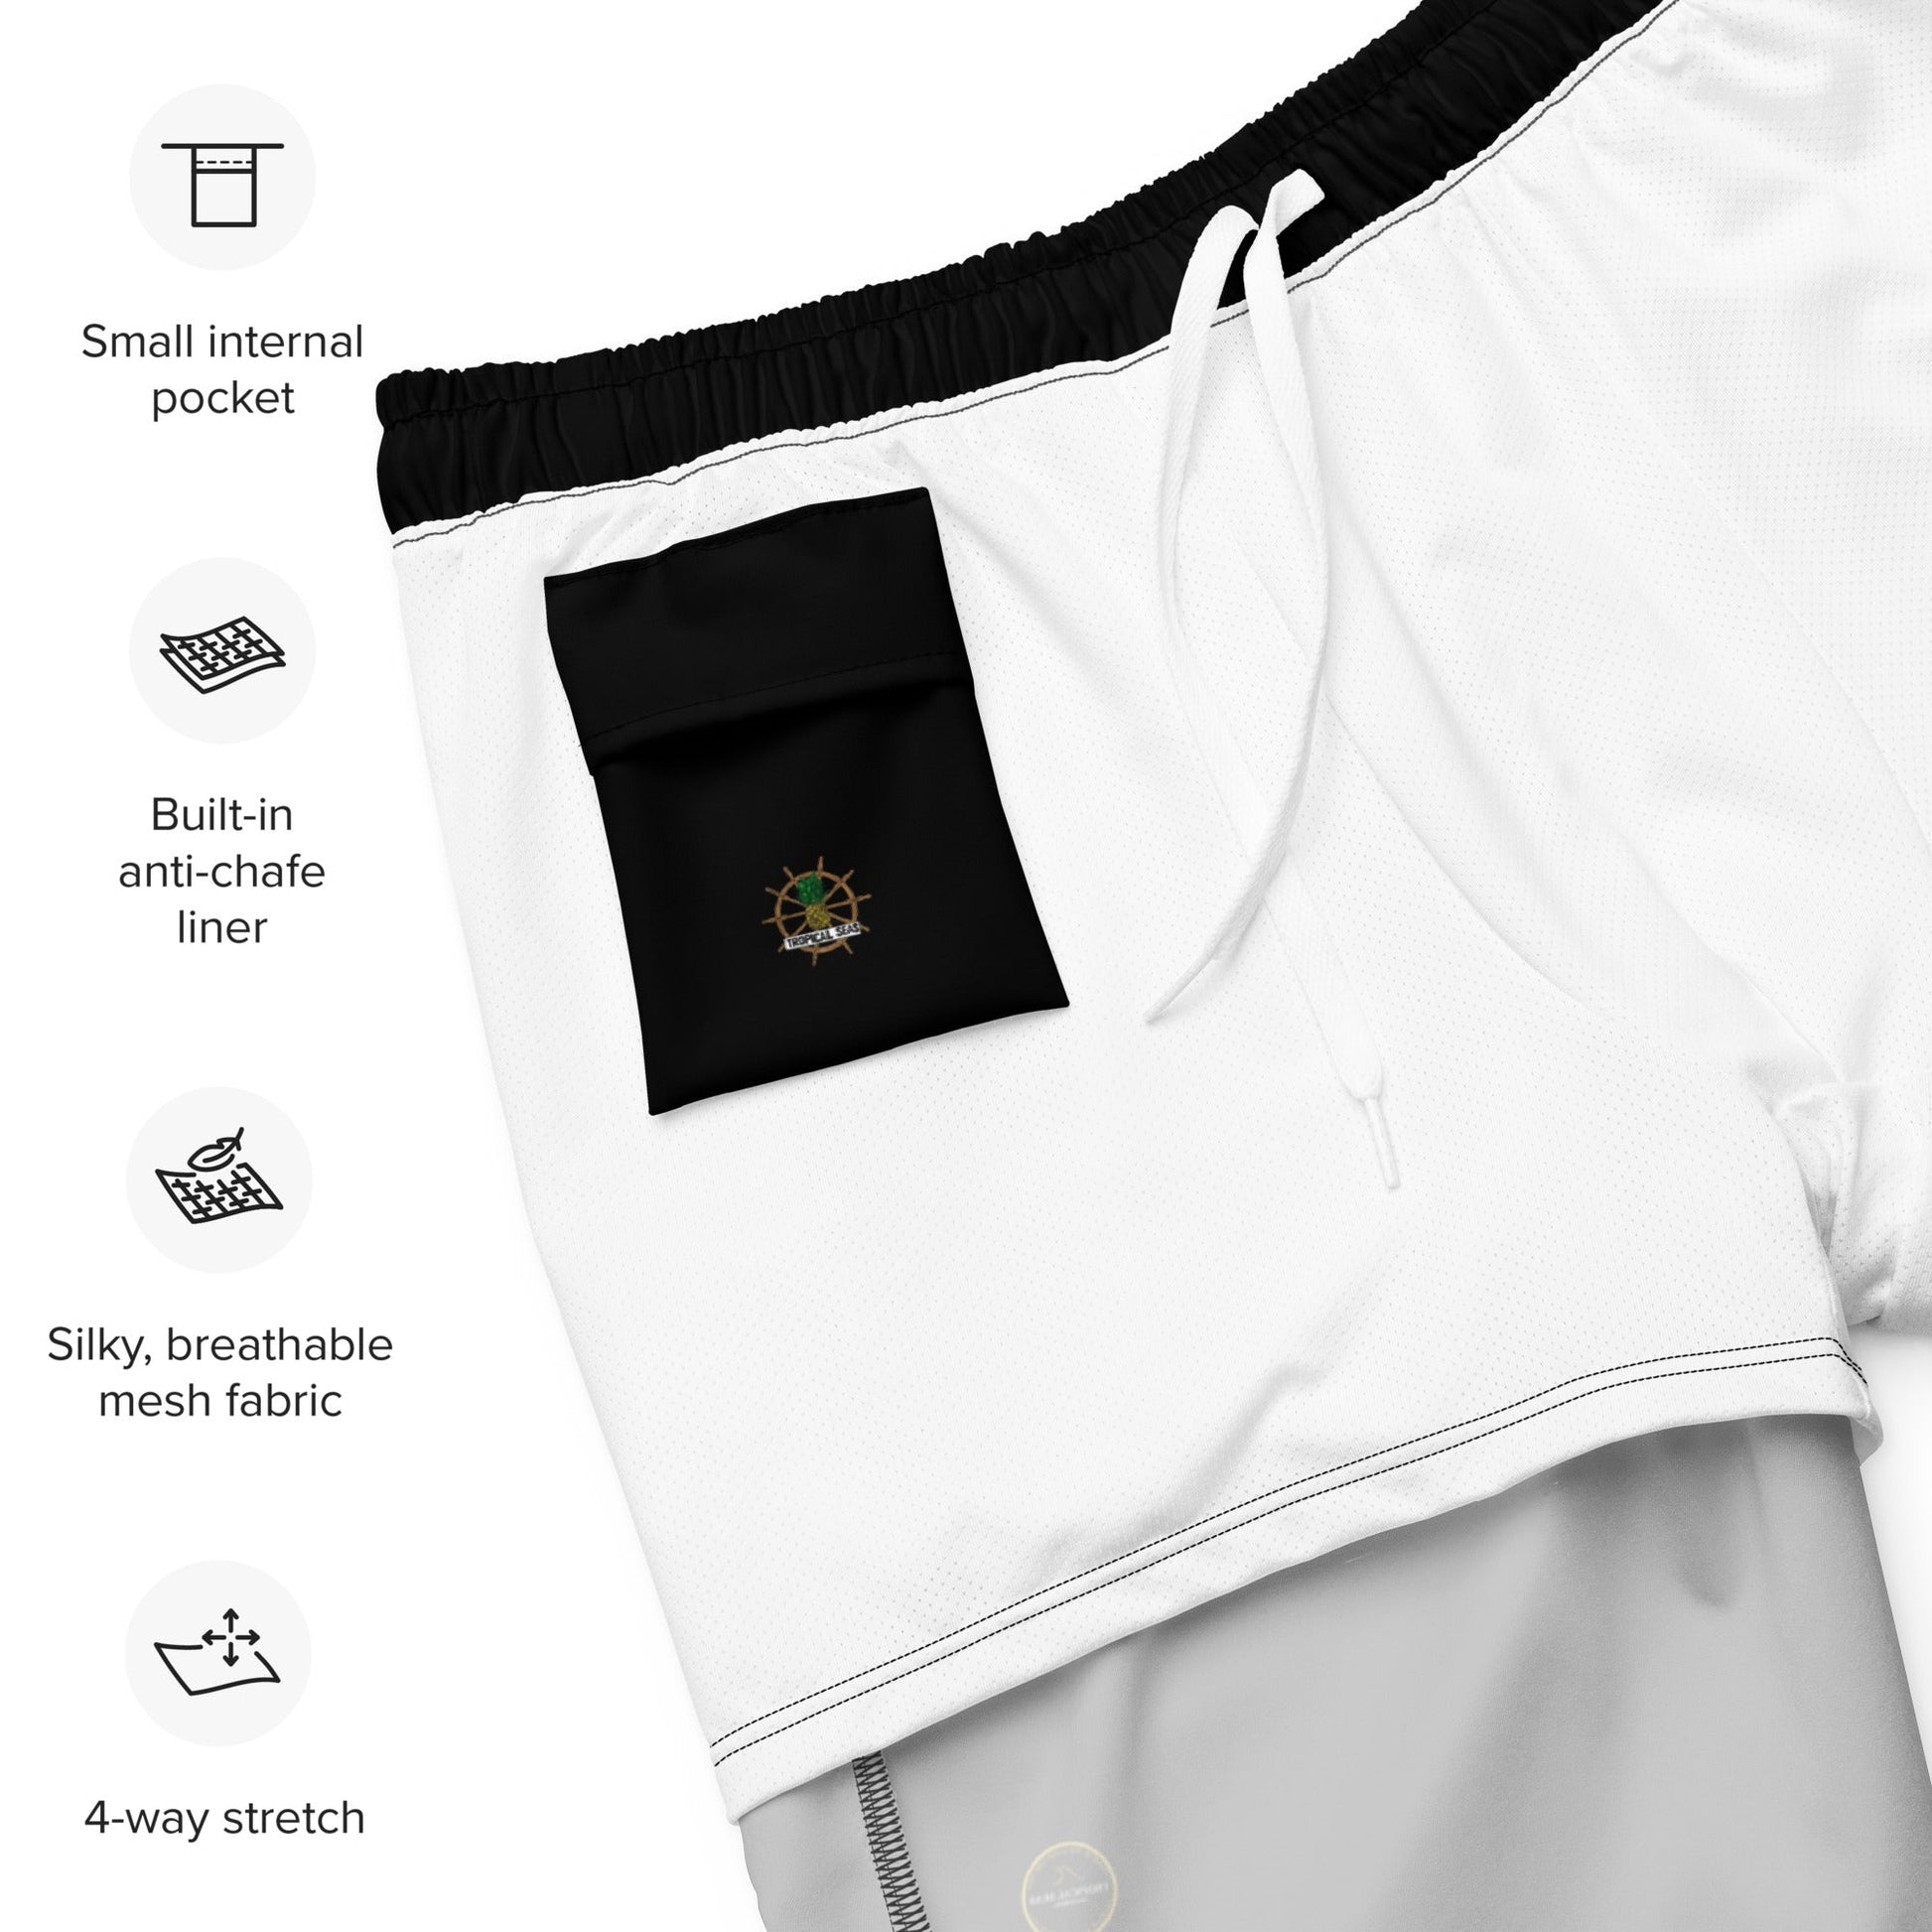 Men's Black Eco Board Shorts - Tropical Seas Clothing 